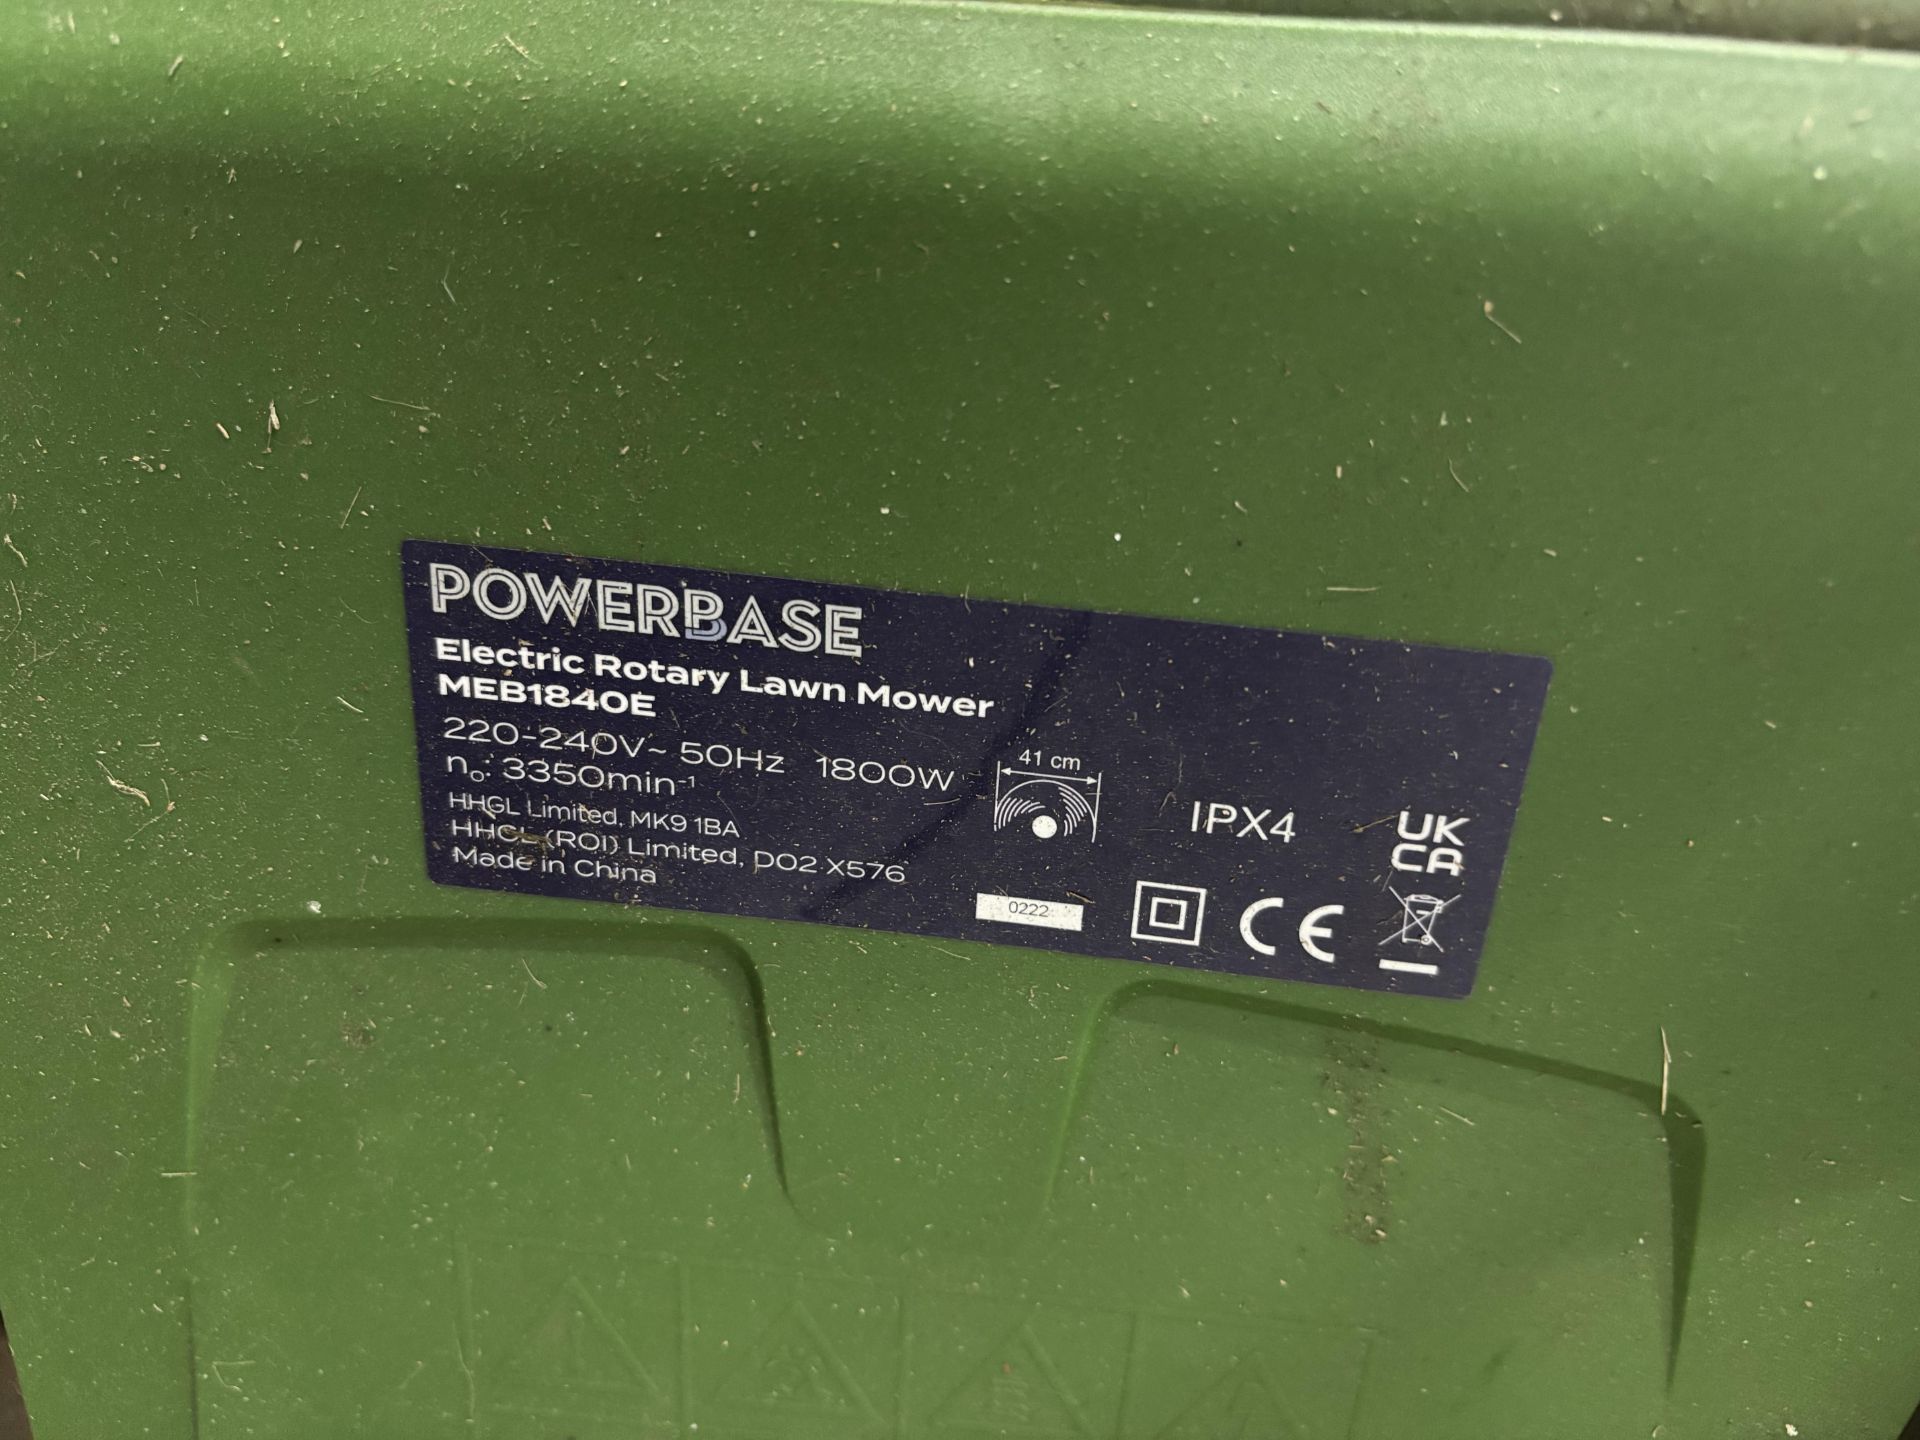 Homebase MEB1840E Powerbase 1800W Electric Lawn Mower, 41cm - Image 6 of 8